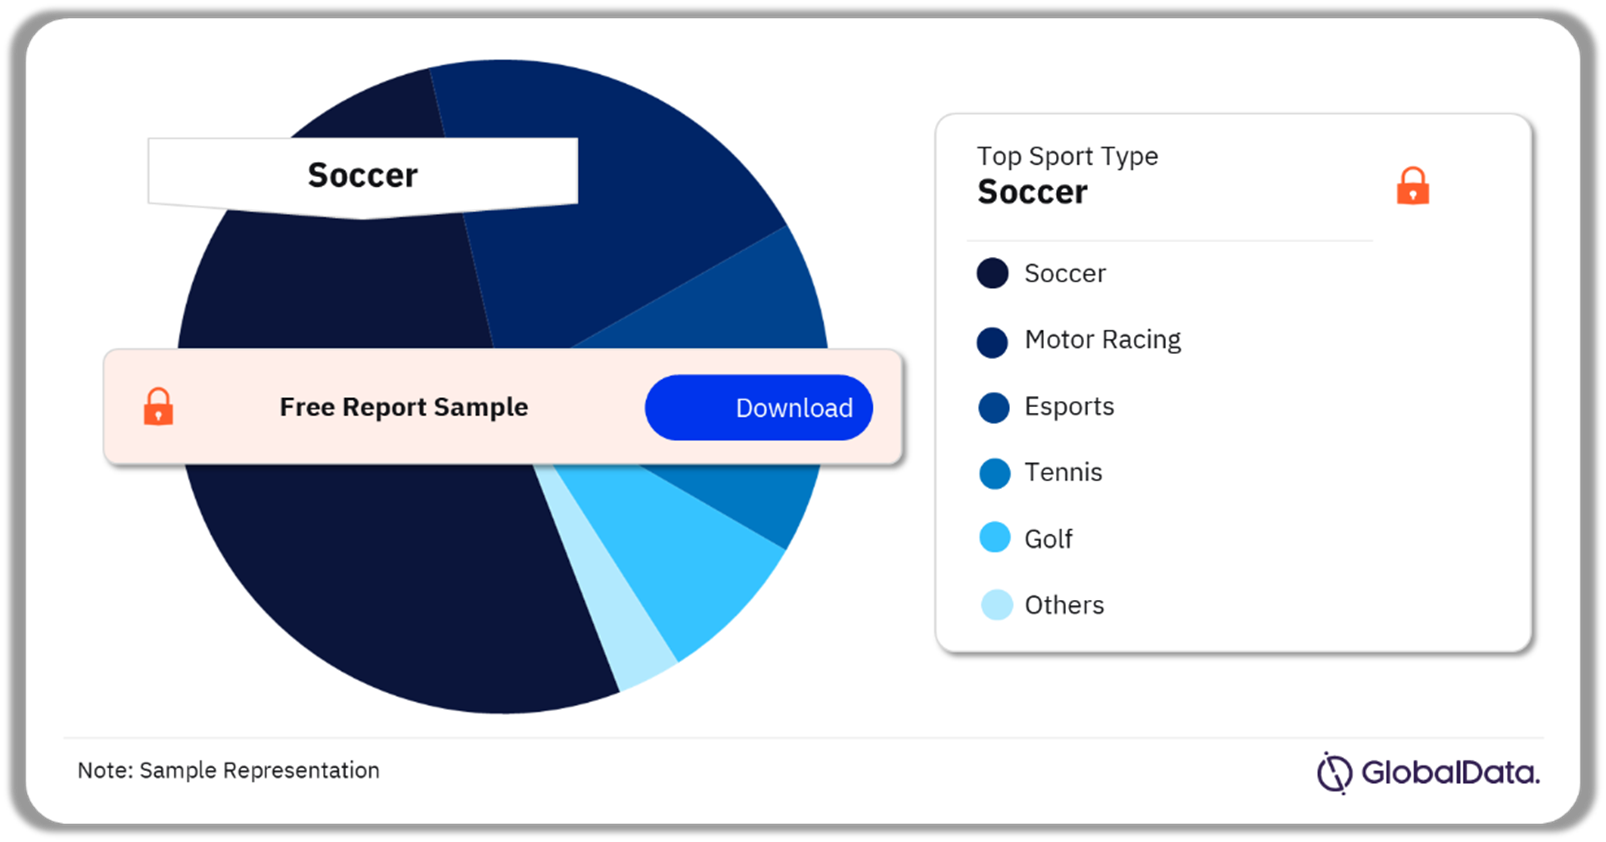 EMEA Sport Technology Sponsorship Landscape by Sports Type, 2024 (%)